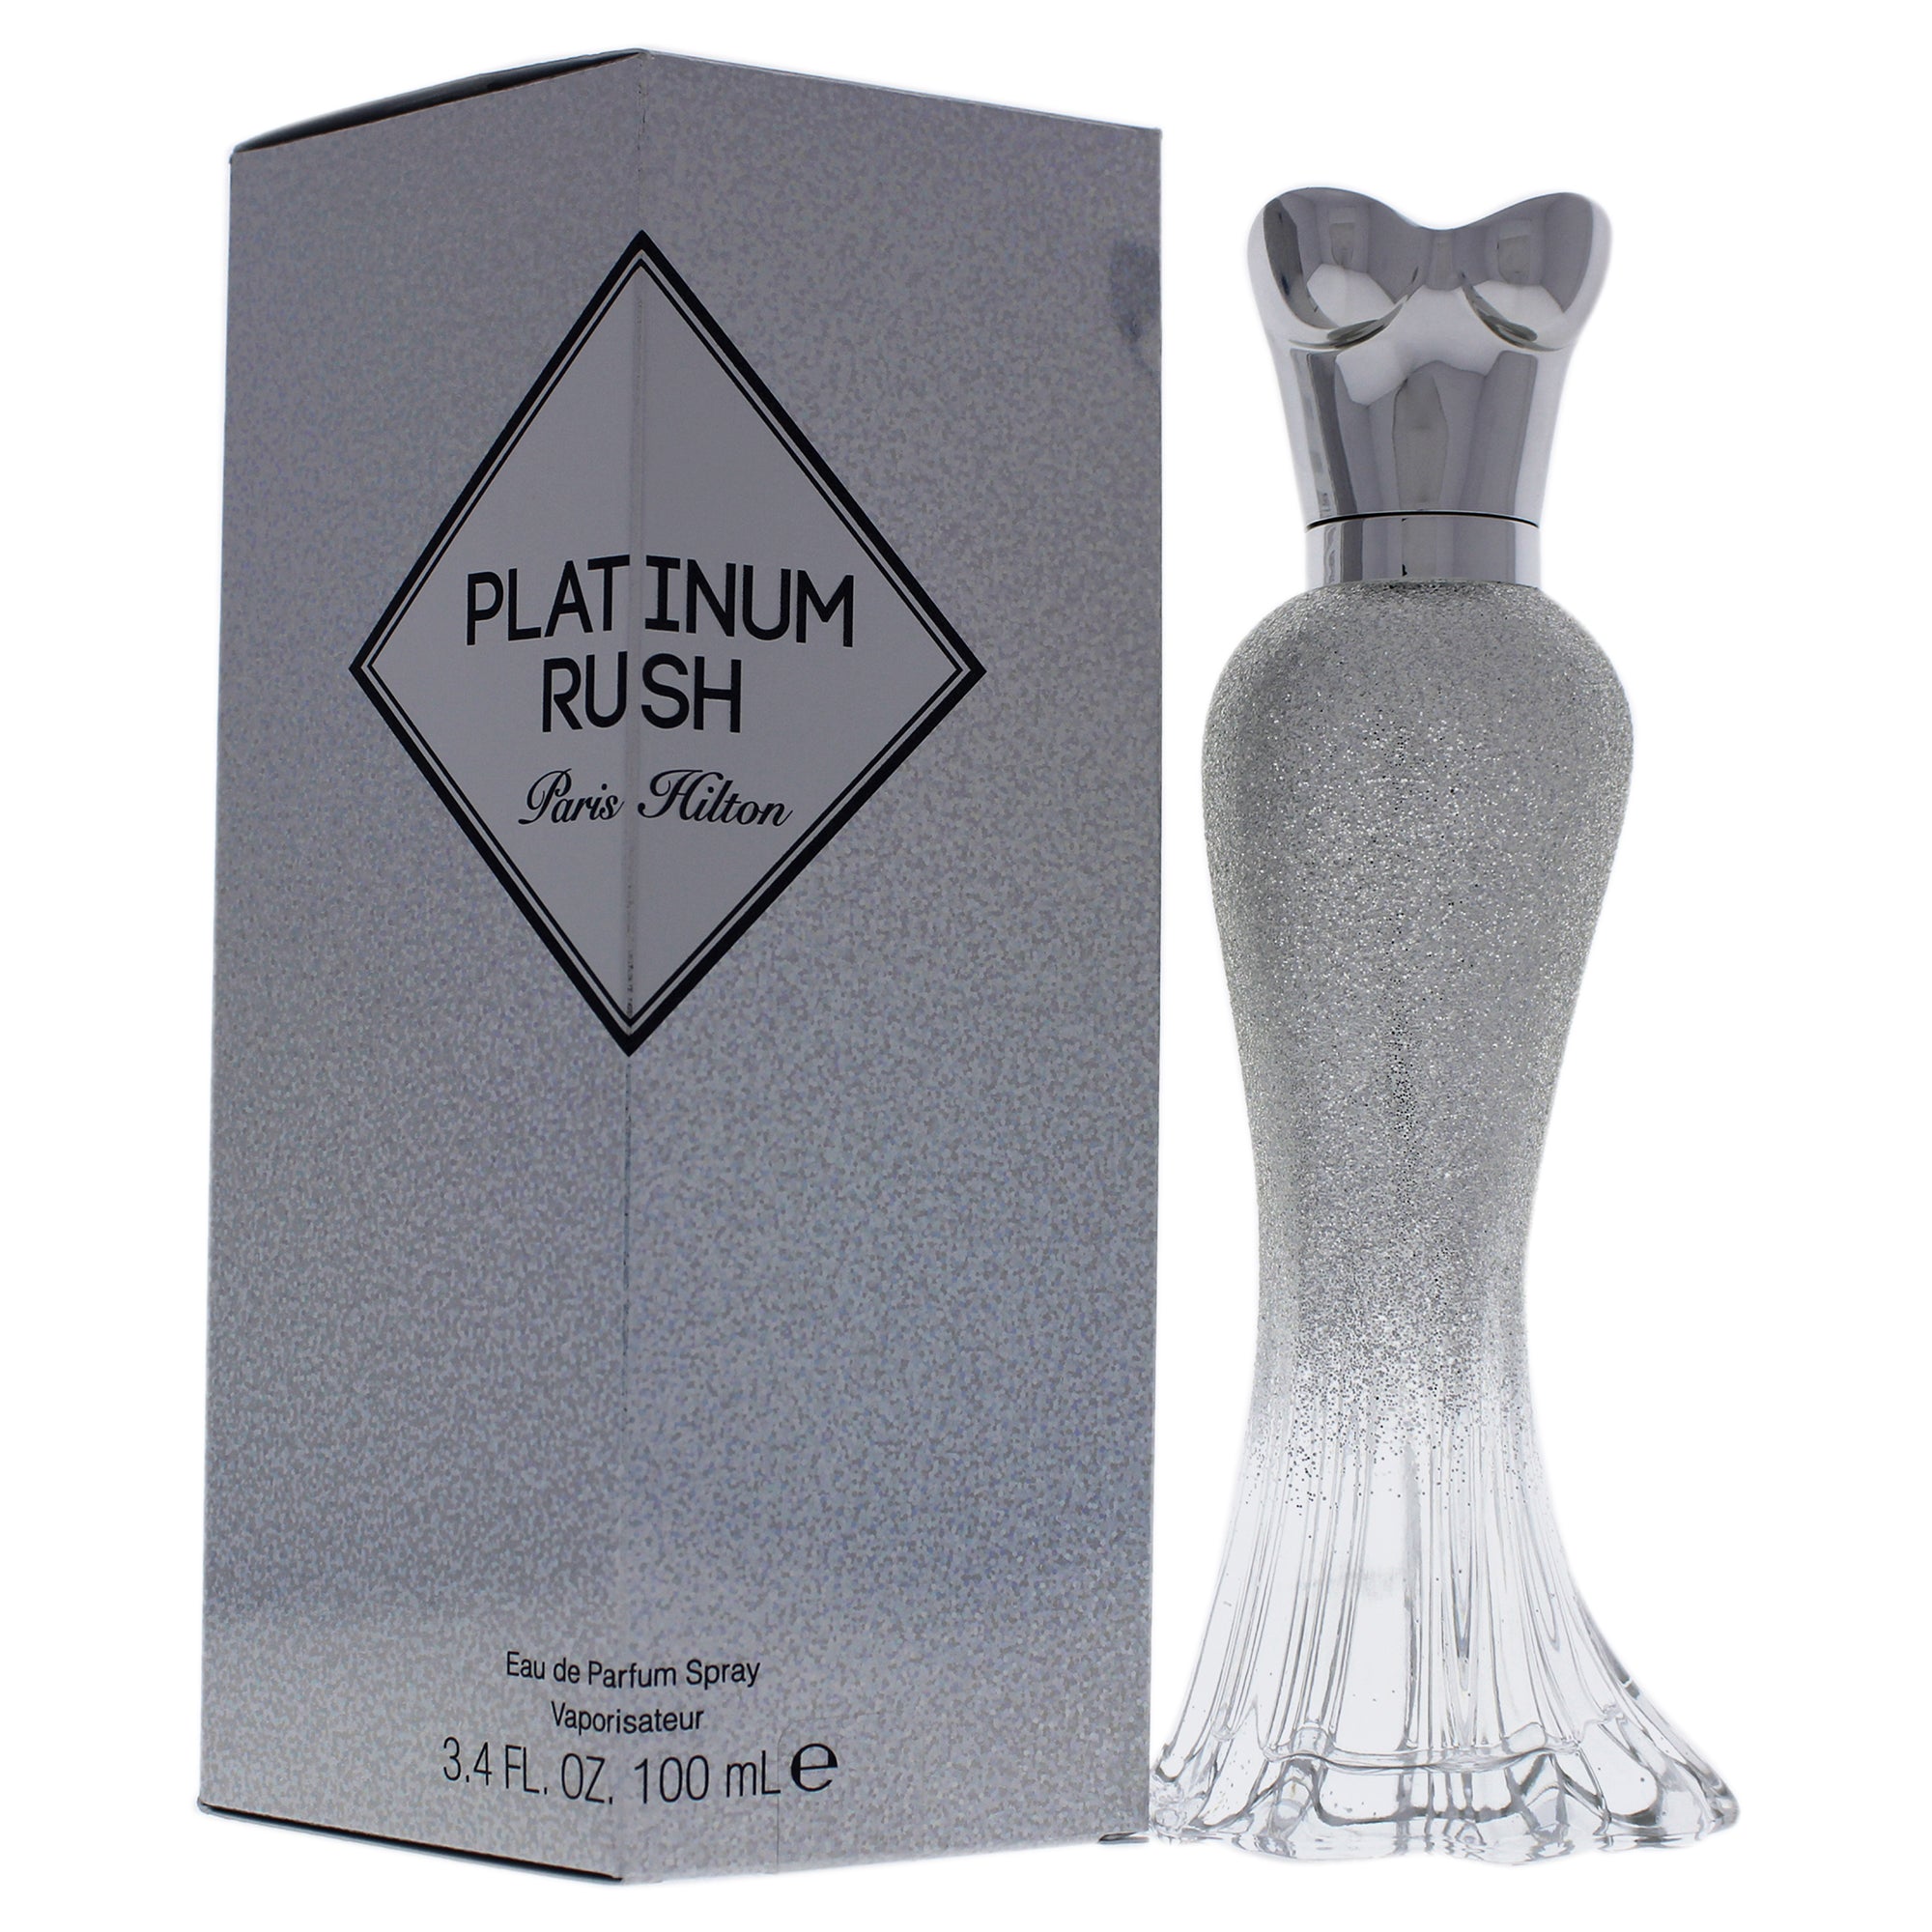 Platinum Rush by Paris Hilton for Women 3.4 oz EDP Spray